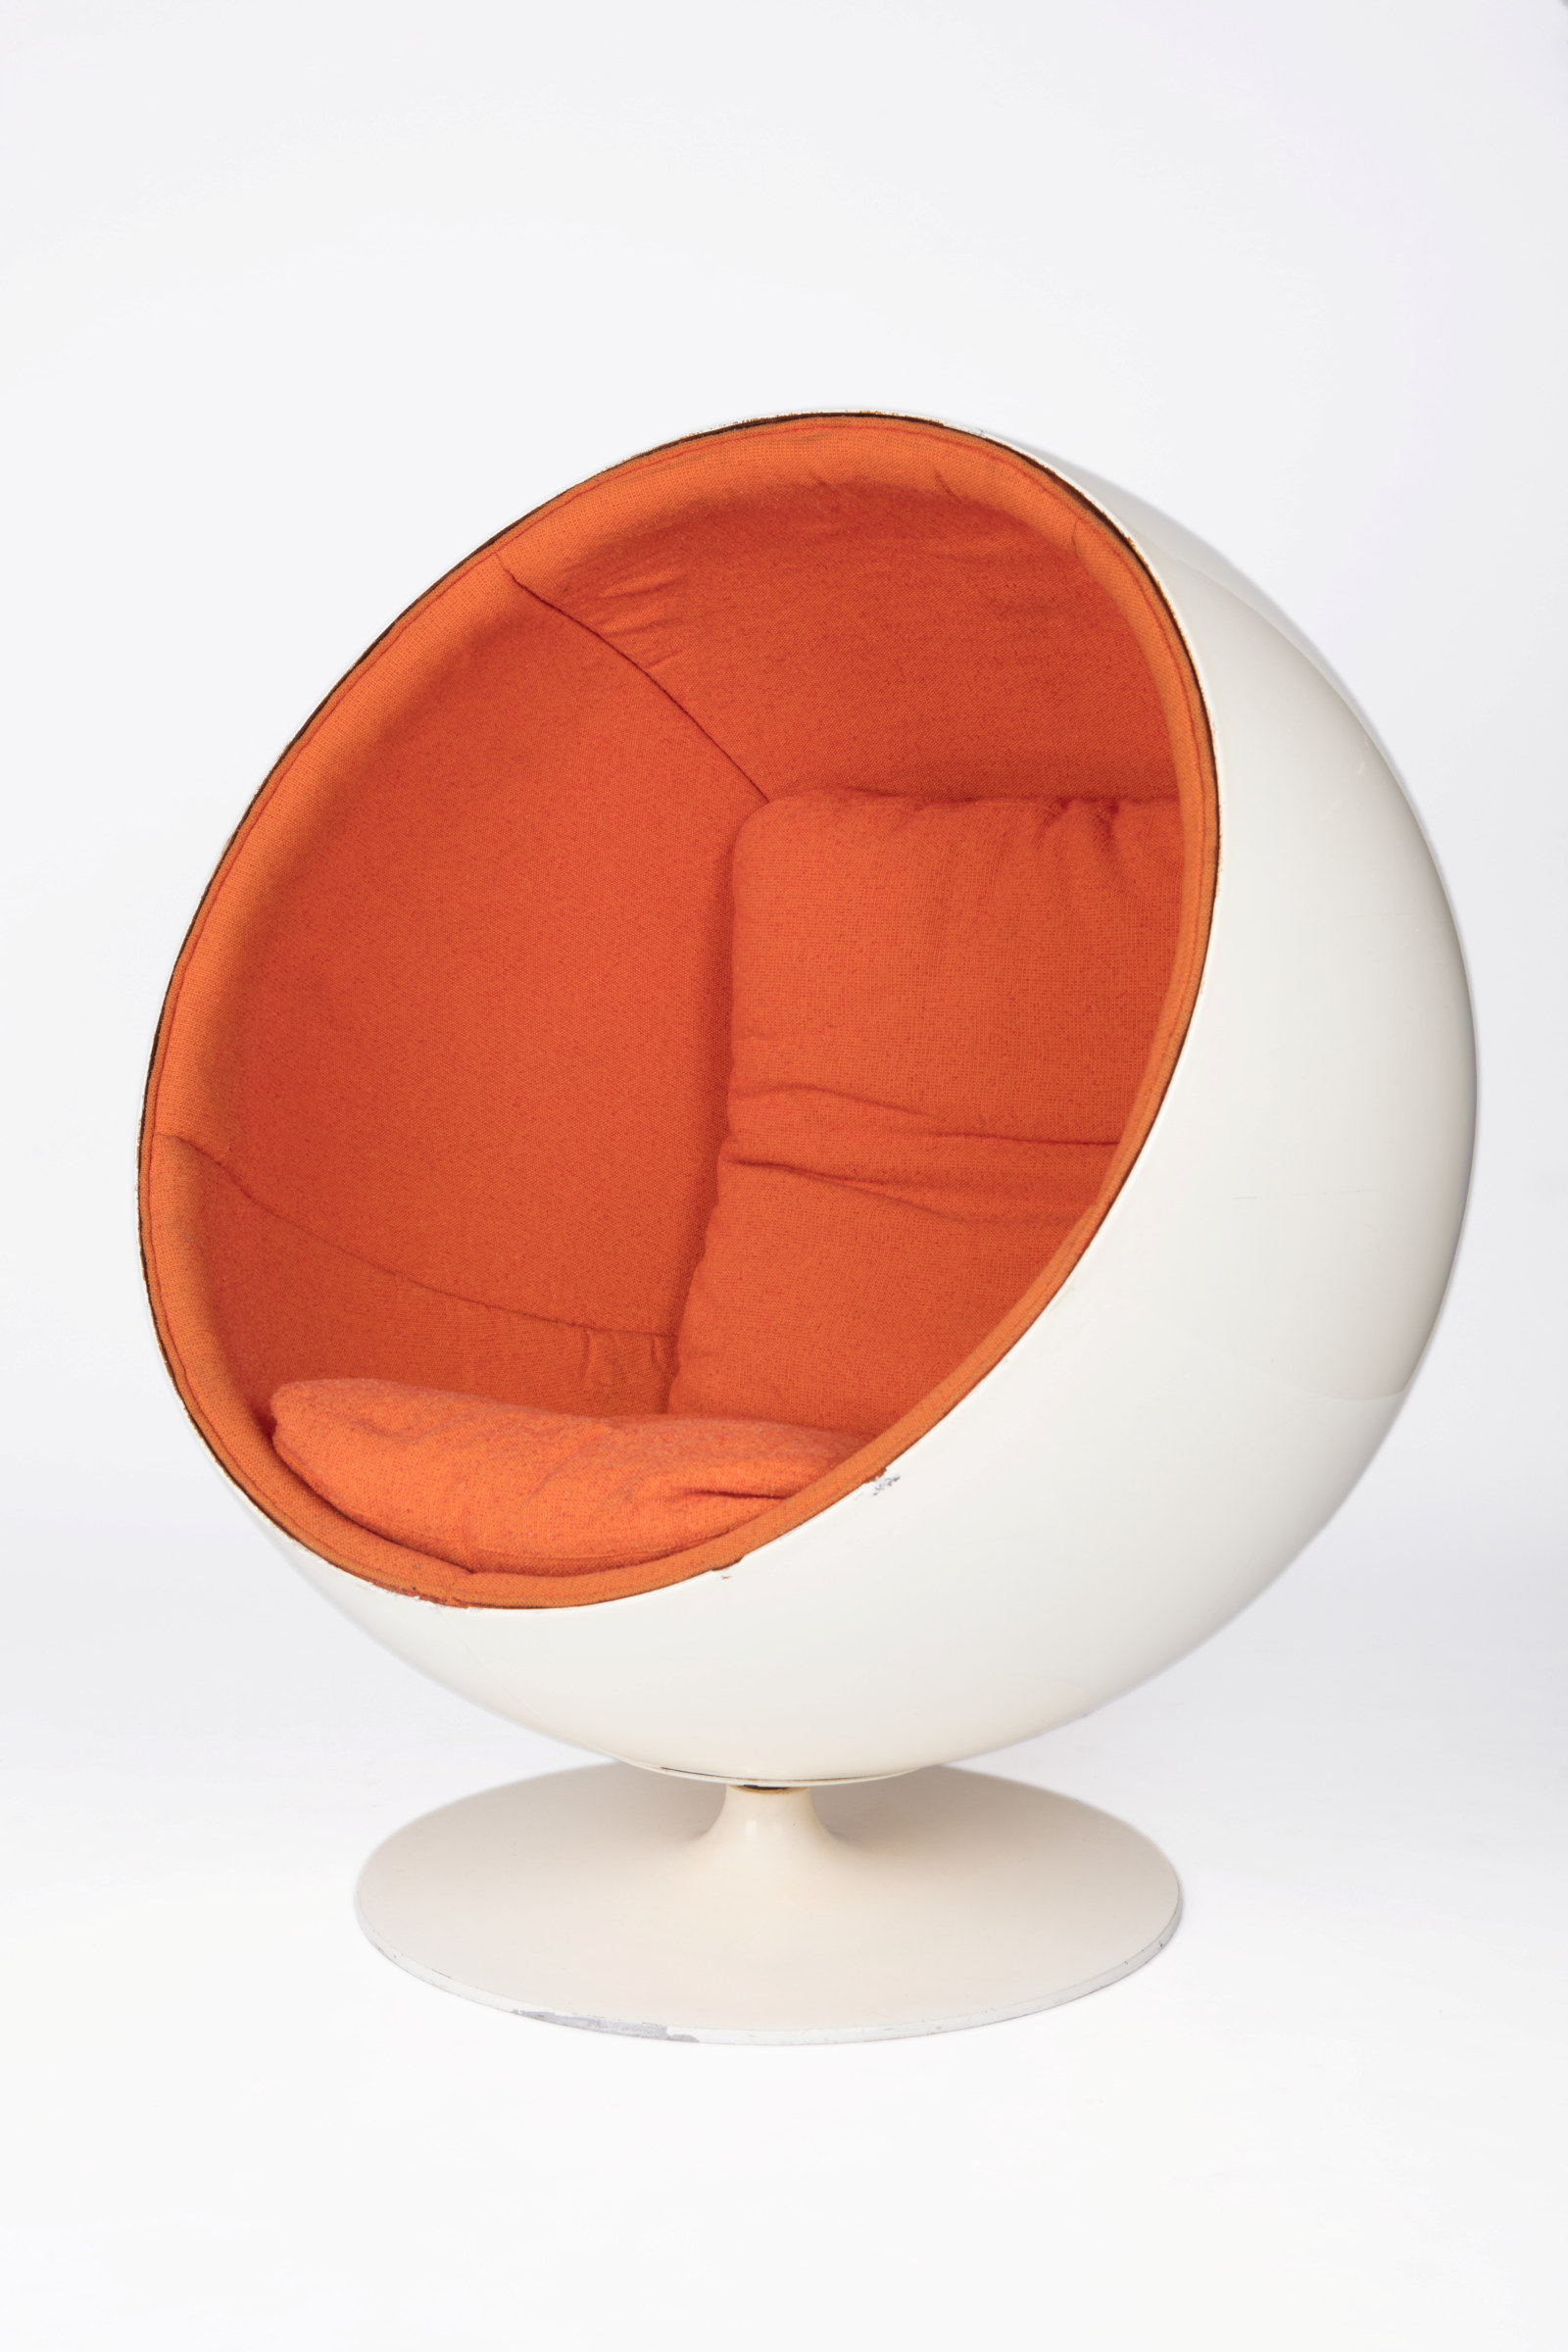 Pallo/Ball chair, design by Eero Aarnio for Asko, Finland, c1967